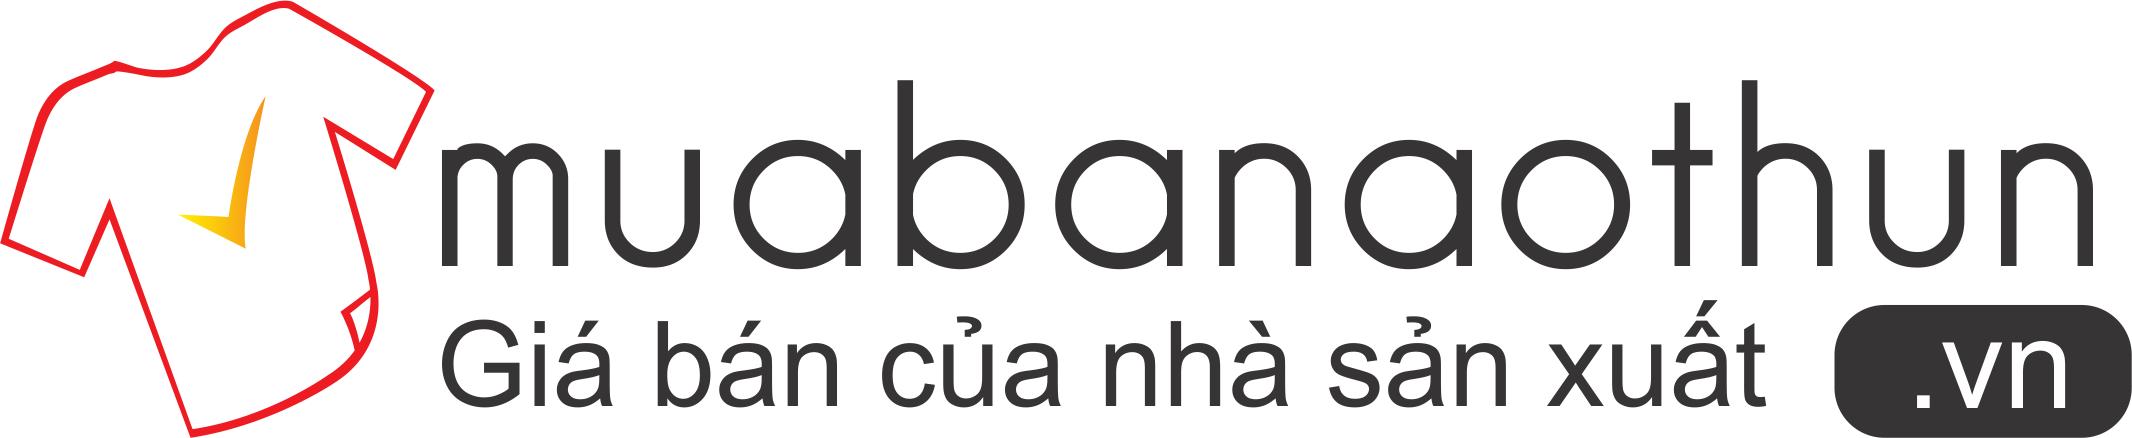 logo-muabanaothun